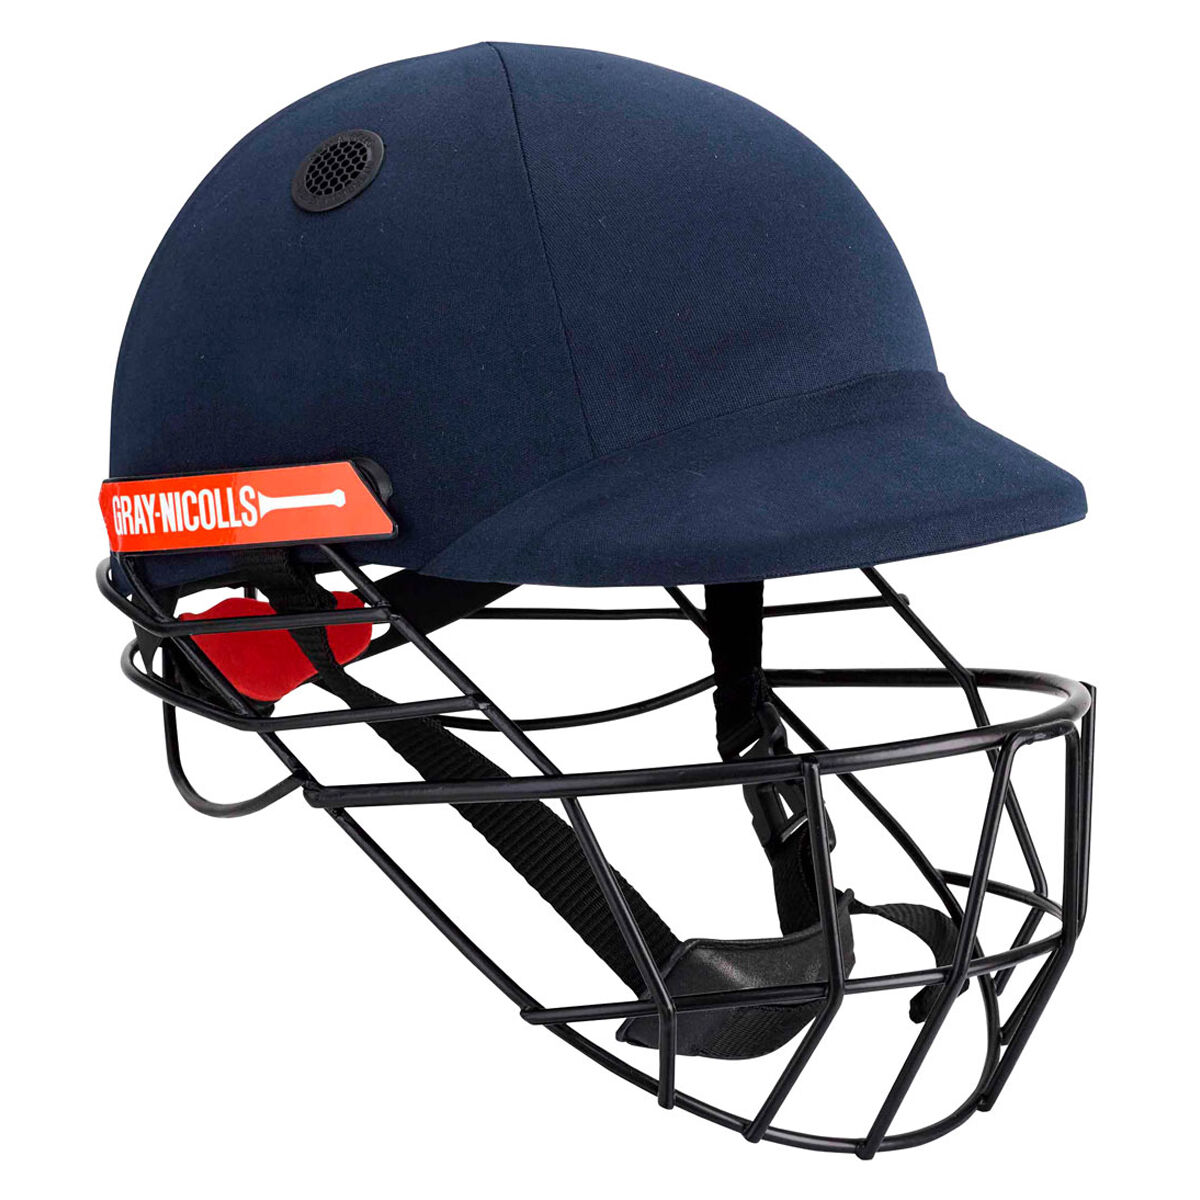 Gray Nicolls Atomic Cricket Helmet Navy, Boys 